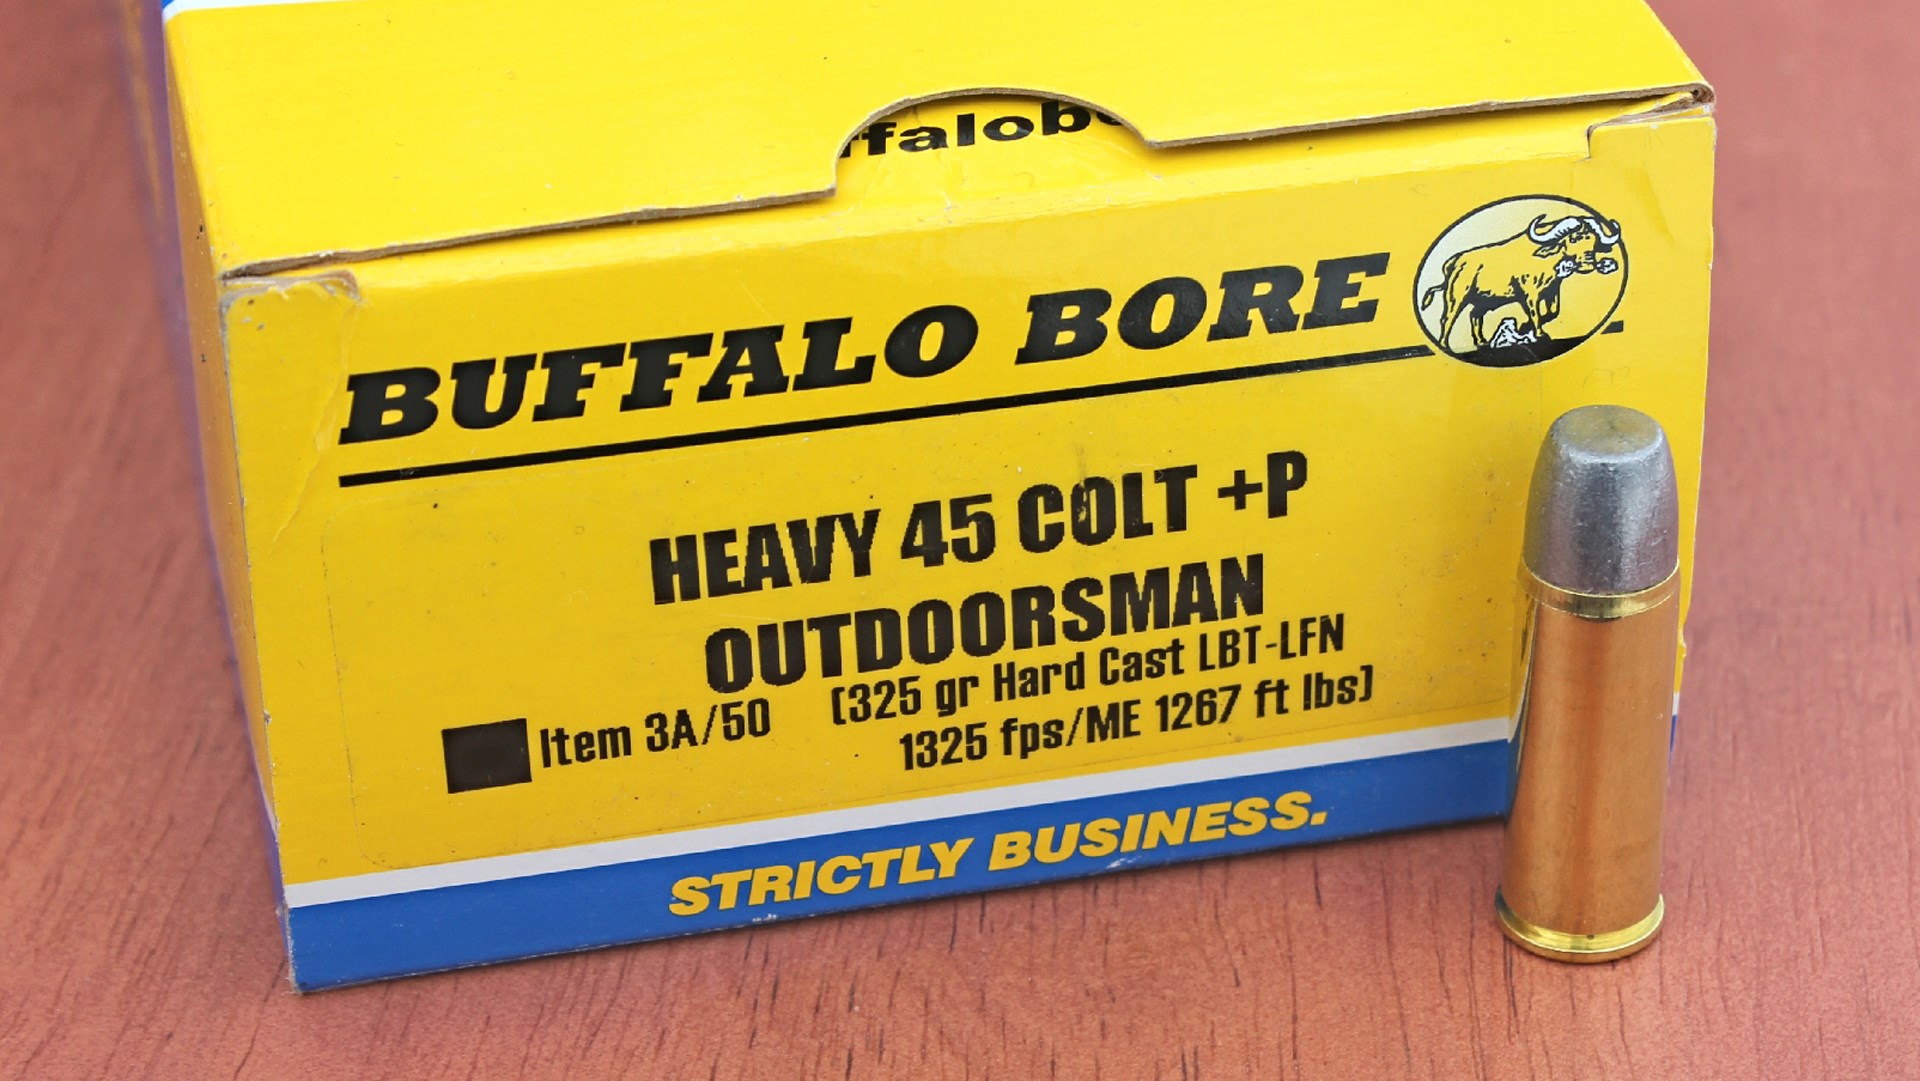 buffalo bore ammunition heavy 45 colt +P outdoorsman load yellow box bullet ammo container cartridge